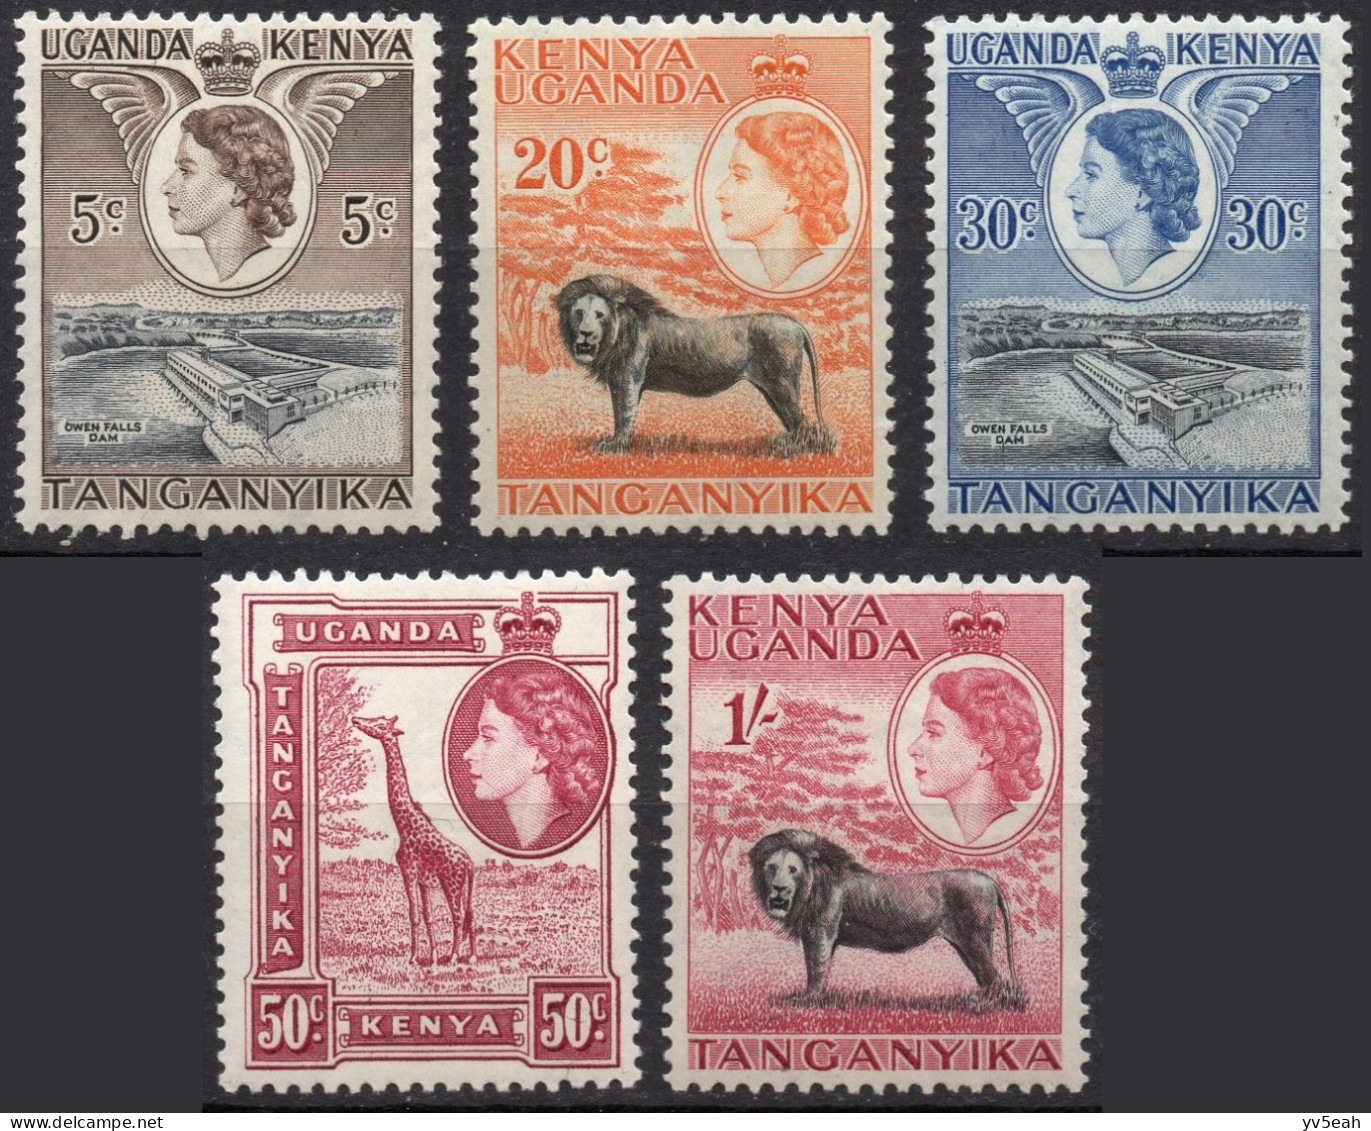 KENYA UGANDA & TANZANIA/1954-9/MH/SC#103, 107-8, 110, 112/ QUEEN ELIZABETH II/ QEII / PICTORIAL / ANIMALS/ PARTIAL SET - Kenya, Uganda & Tanzania